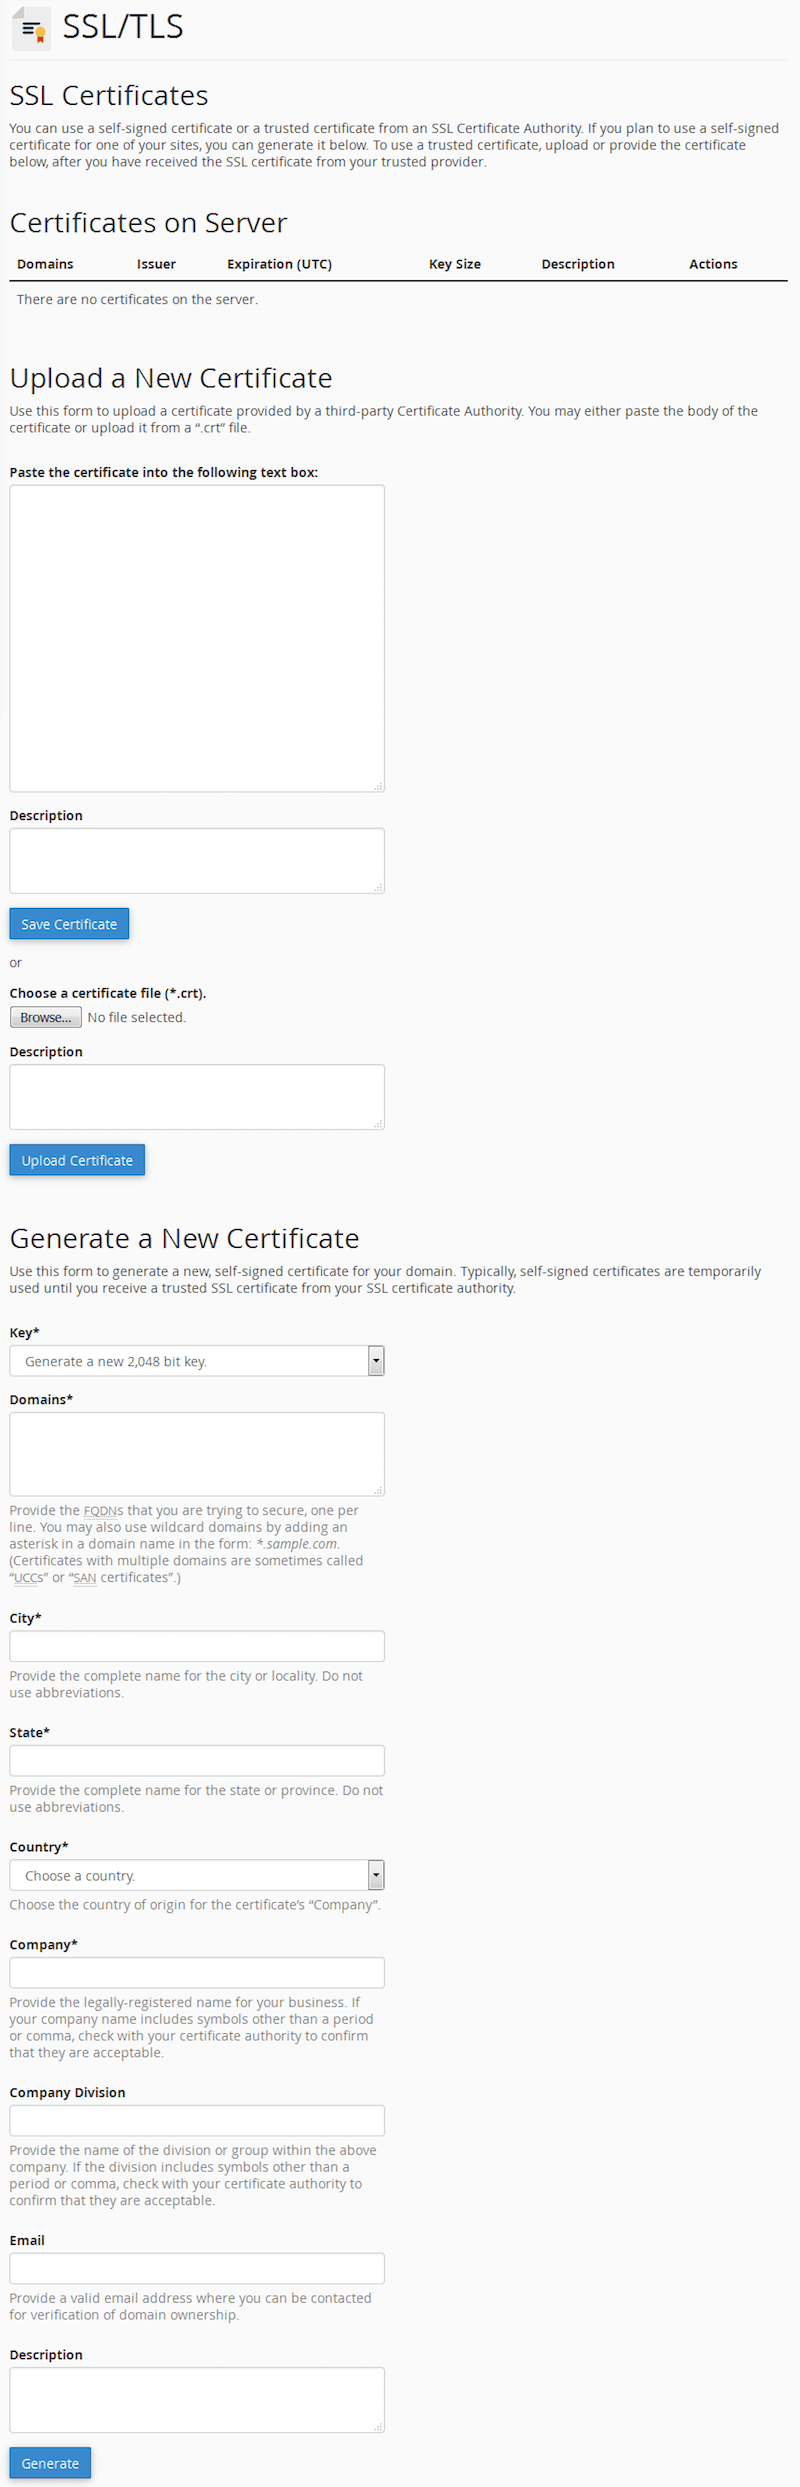 cPanel Import a new SSL certificate